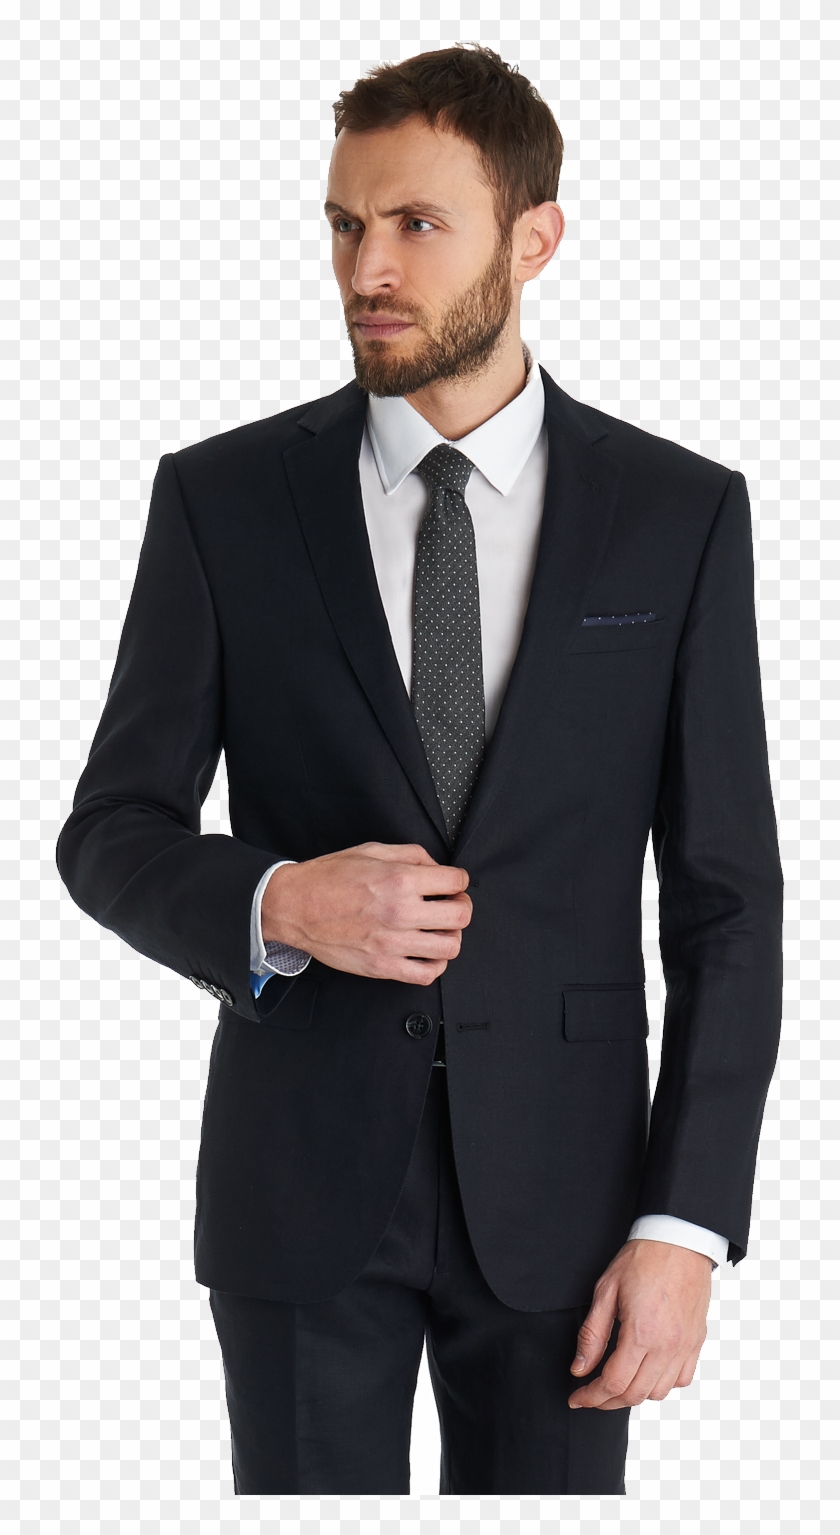 Suit Png Image - Man In Suit Png Clipart #248621